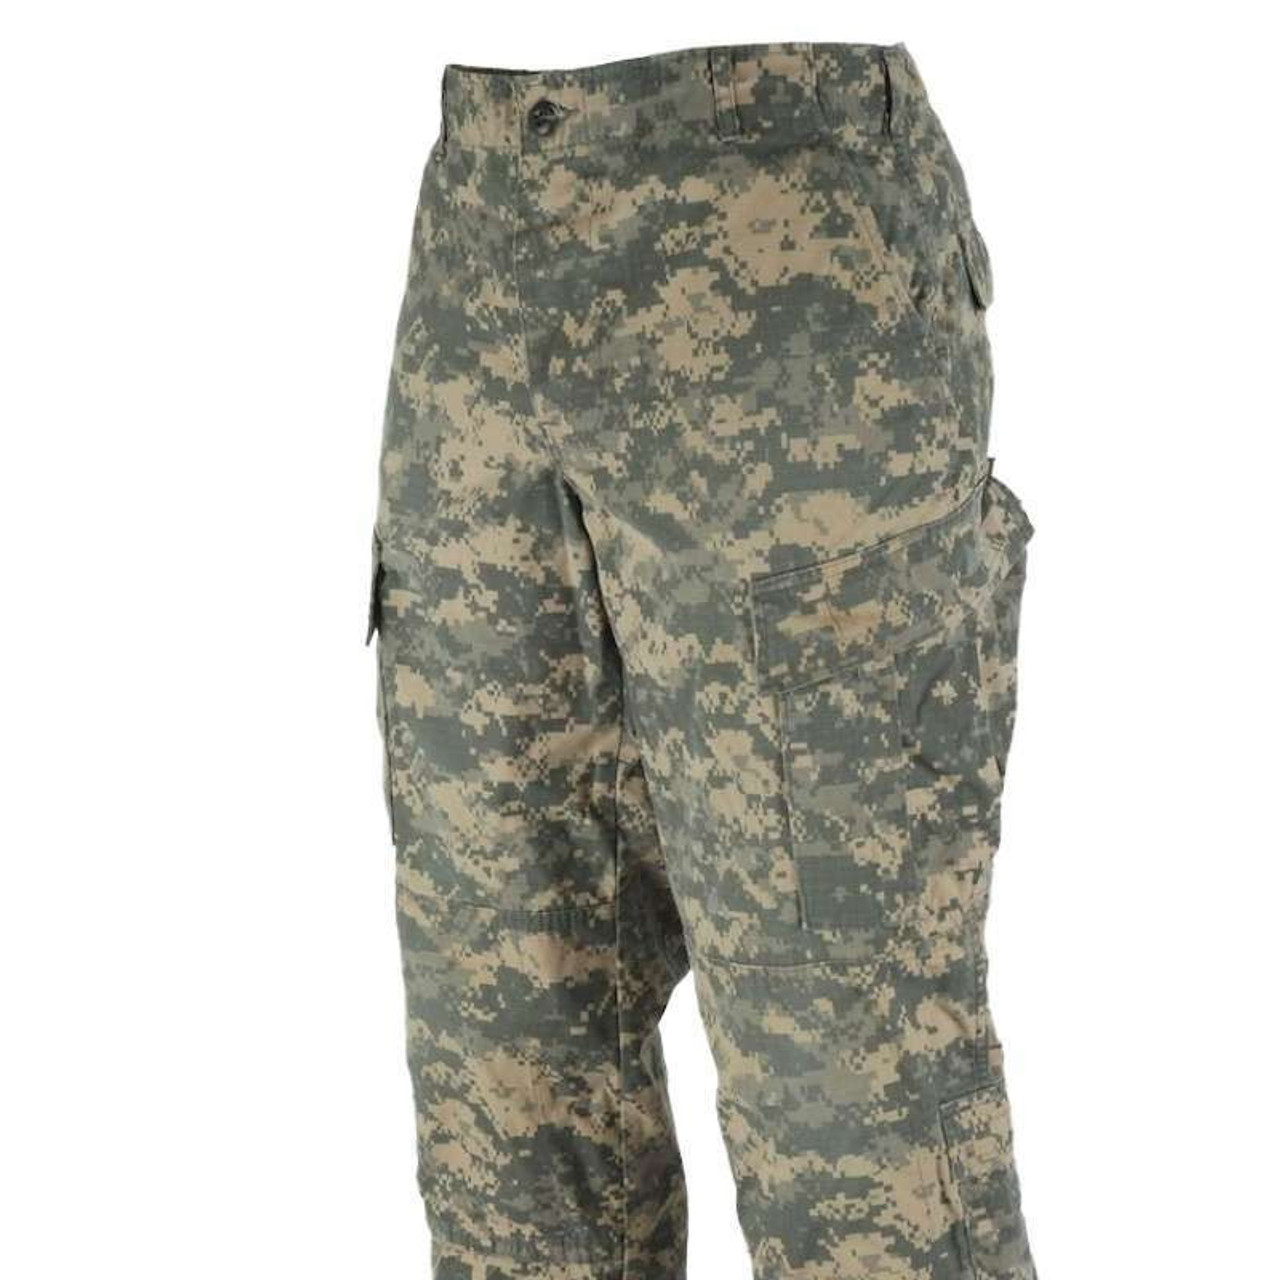 ACU Army issue Pant Used Surplus| Digital Universal Camo